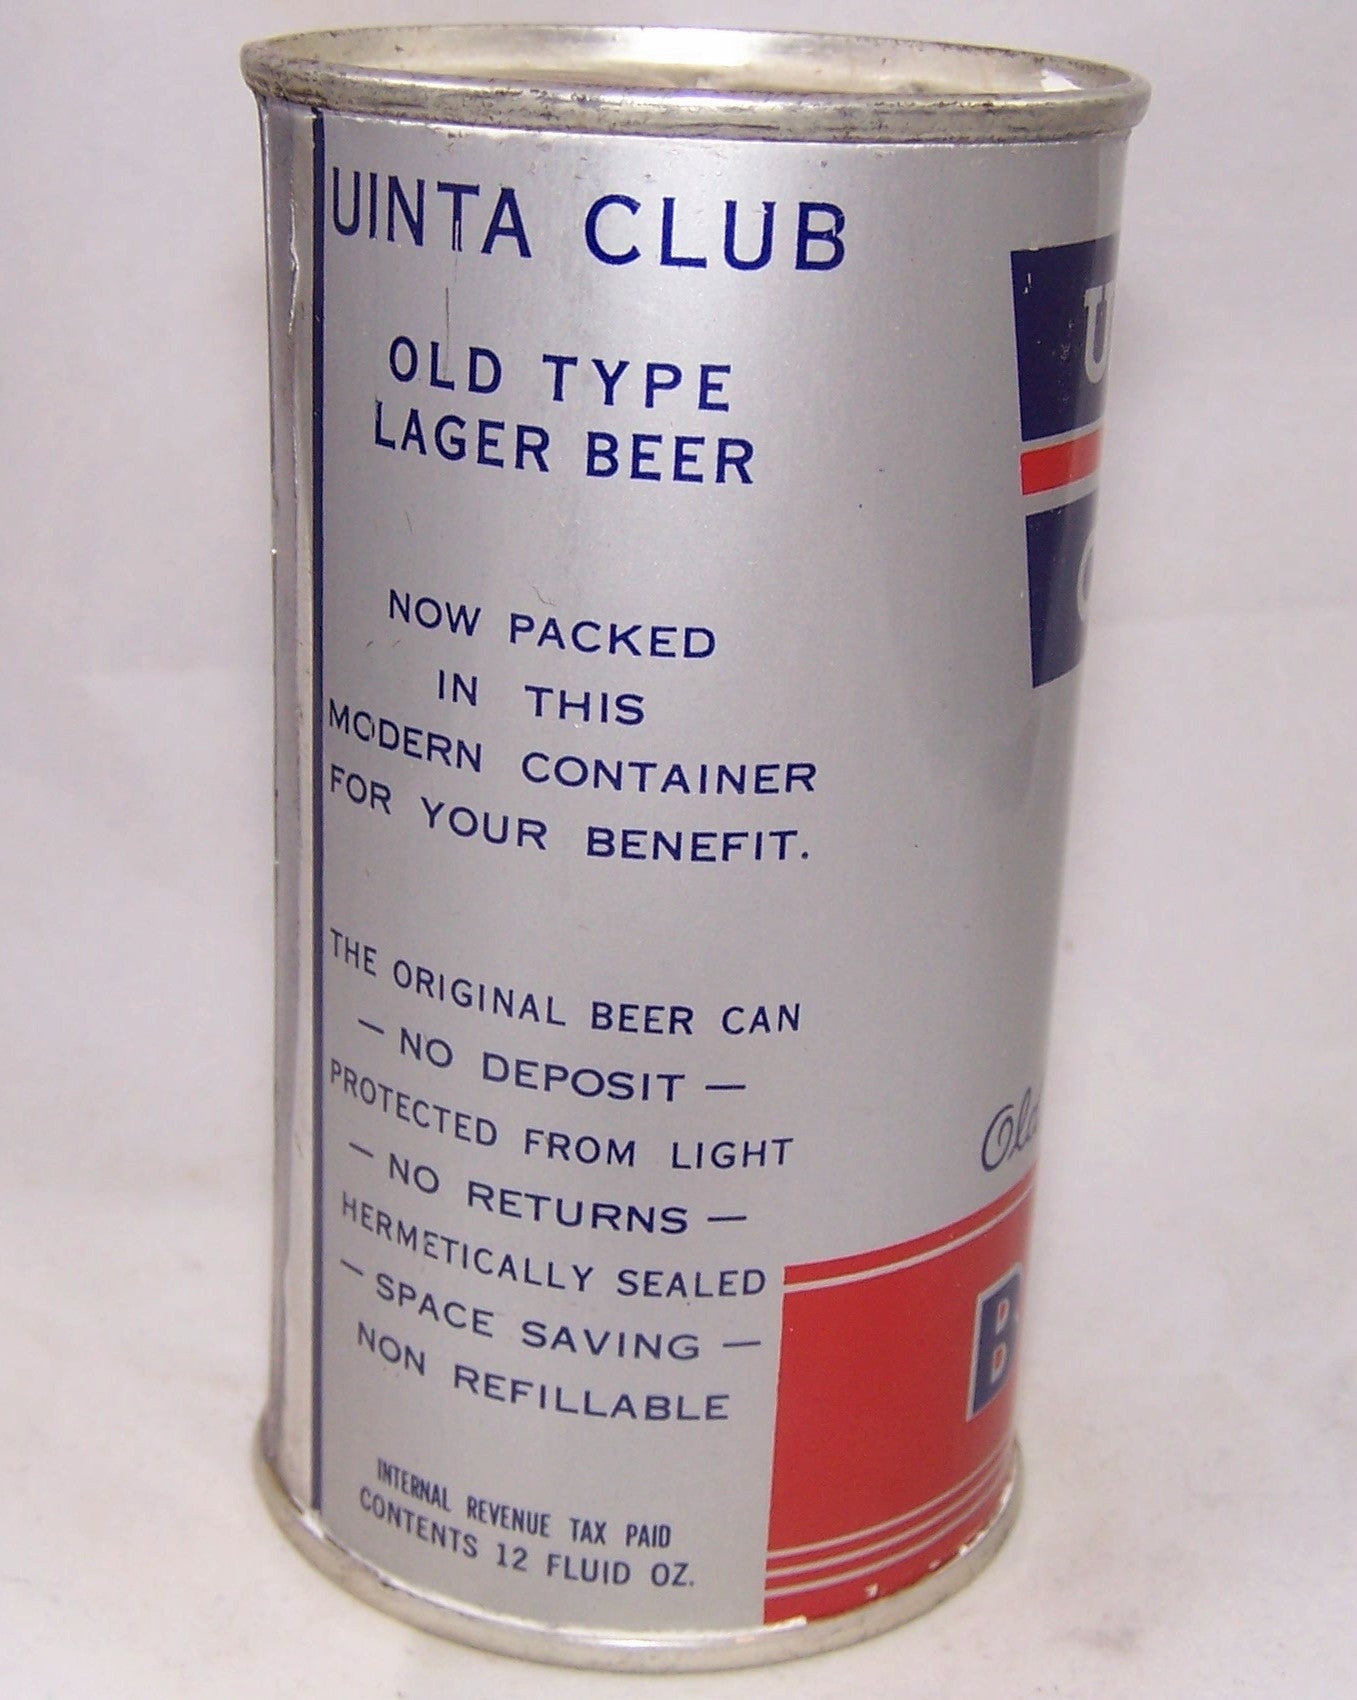 Uinta Club Old Type Lager Beer, Lilek #821, Grade 1/1+ Sold on 12/18/16